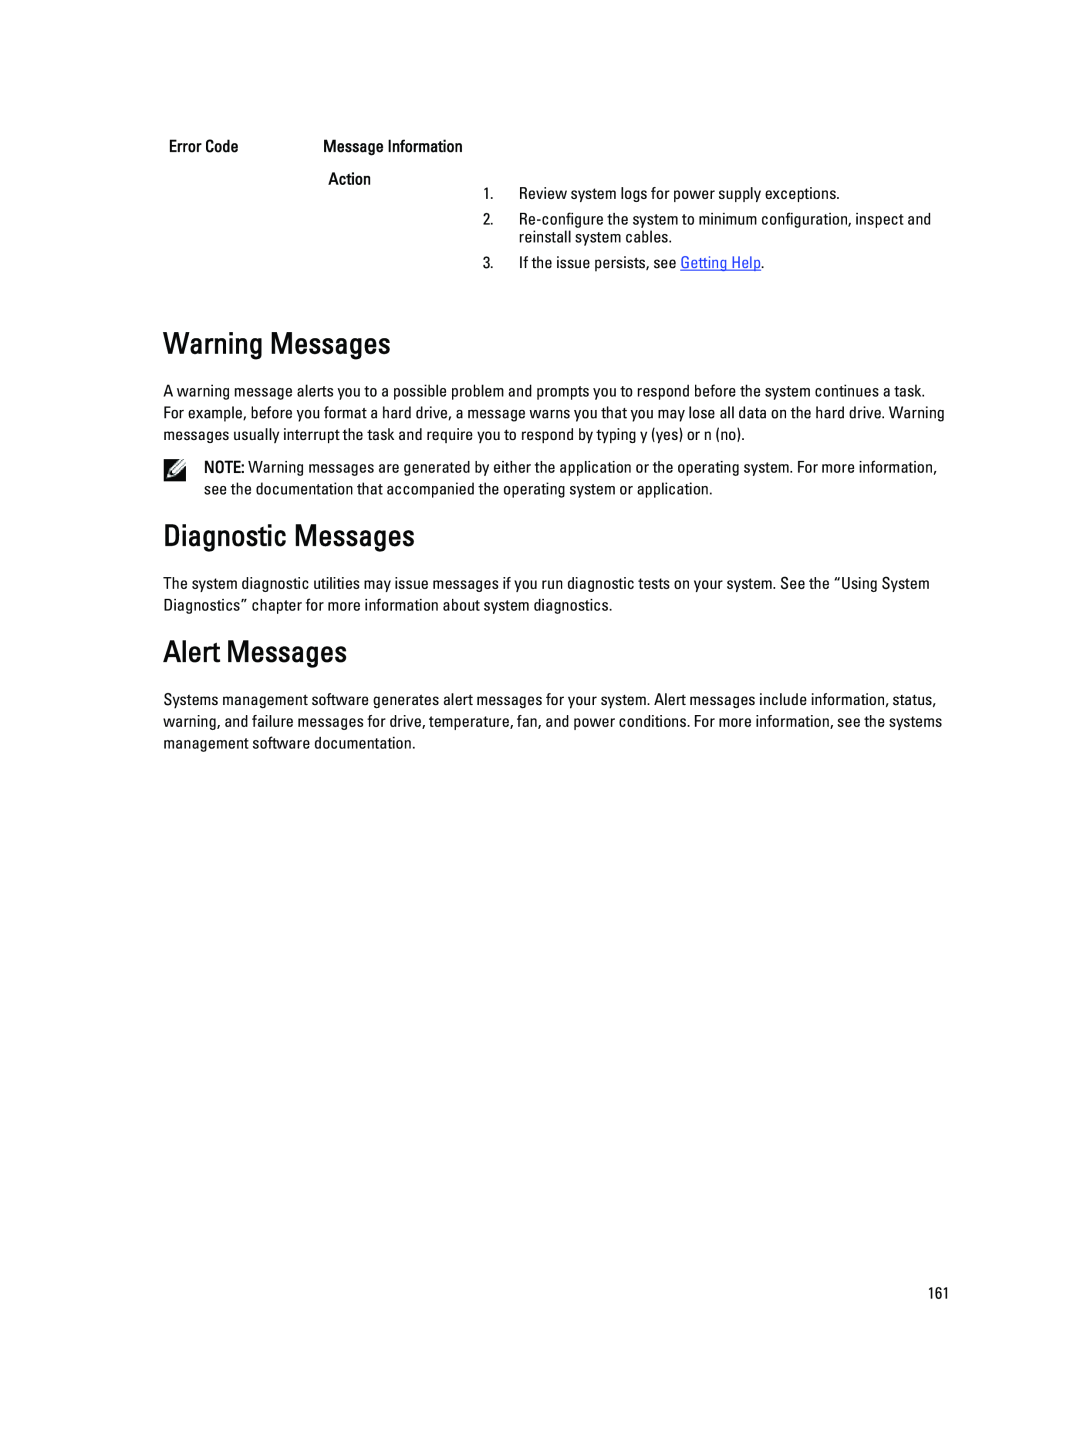 Dell R720XD owner manual Warning Messages, Diagnostic Messages, Alert Messages 